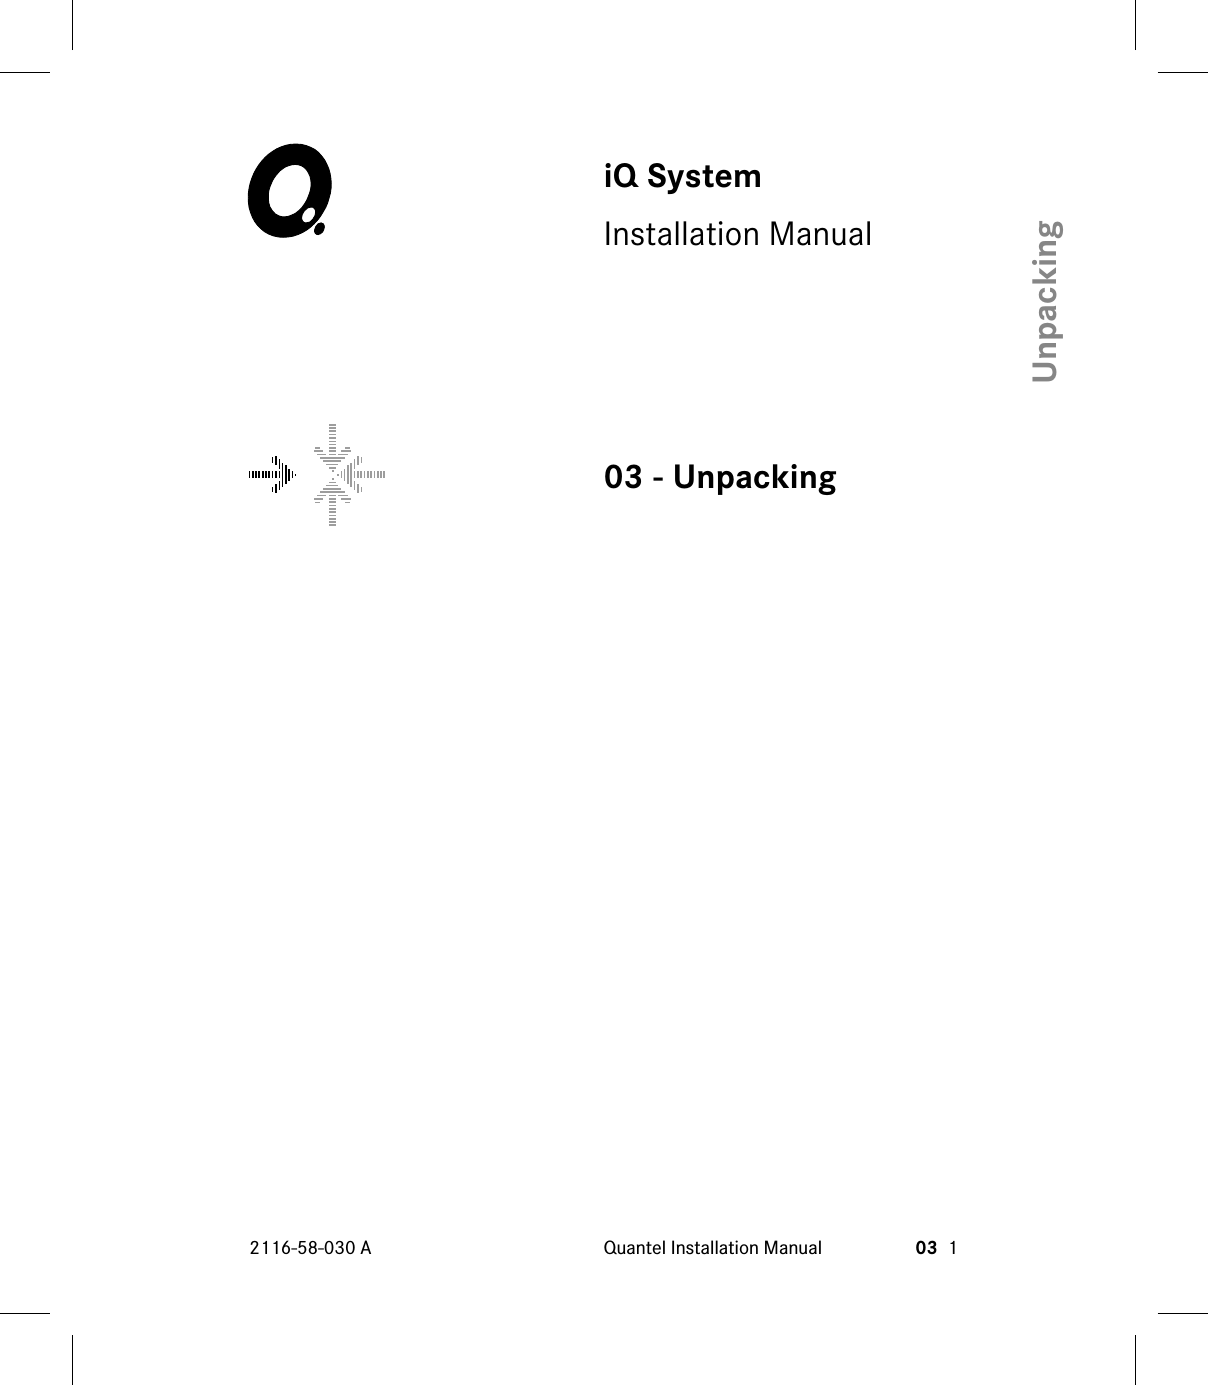 iQ SystemInstallation Manual03 - Unpacking2116-58-030 A Quantel Installation Manual 03 1Unpacking